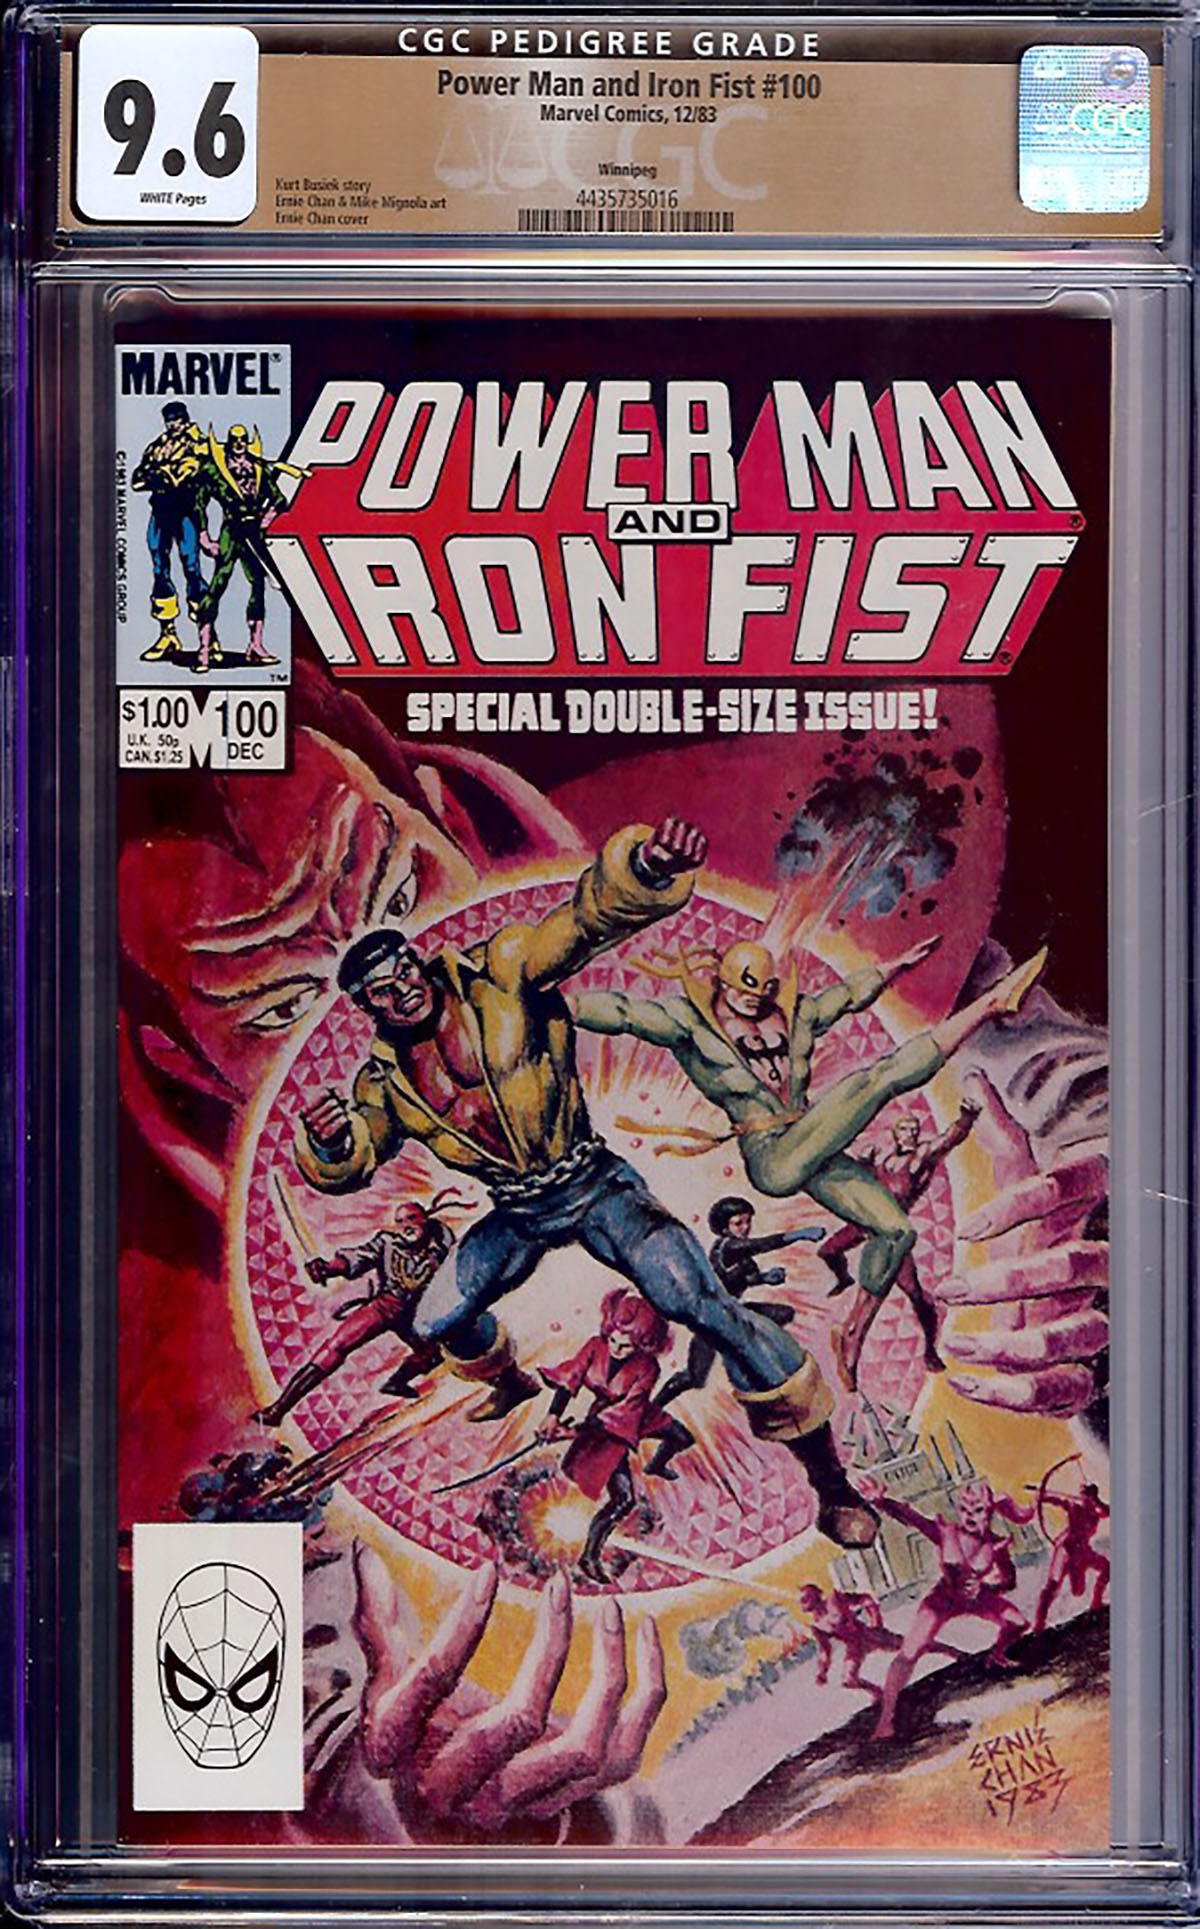 Power Man And Iron Fist #100 CGC 9.6 w Winnipeg